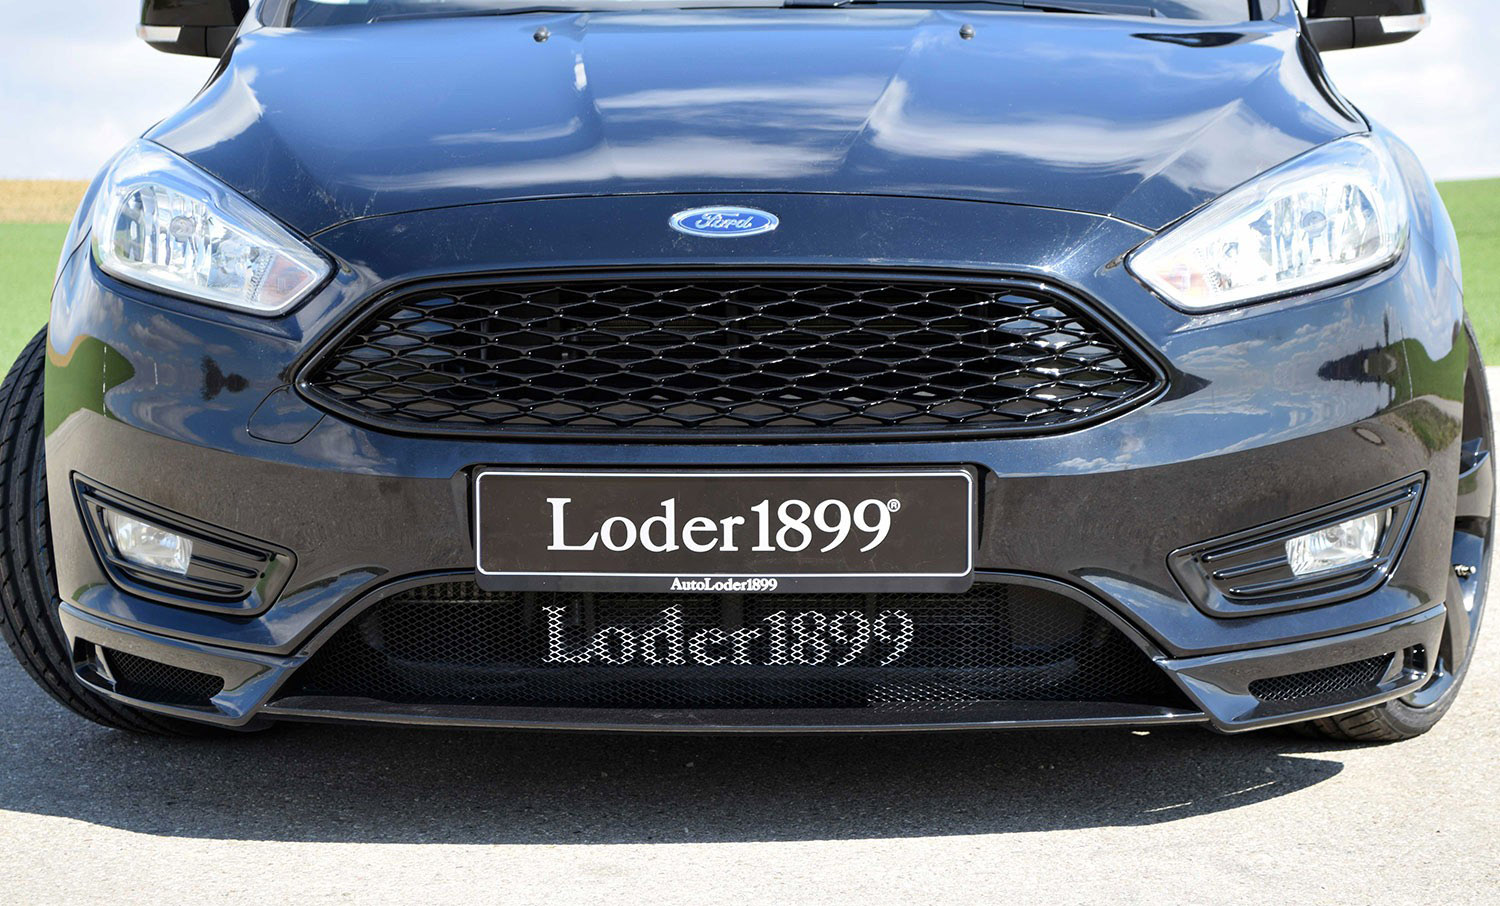 Loder1899 Ford Focus